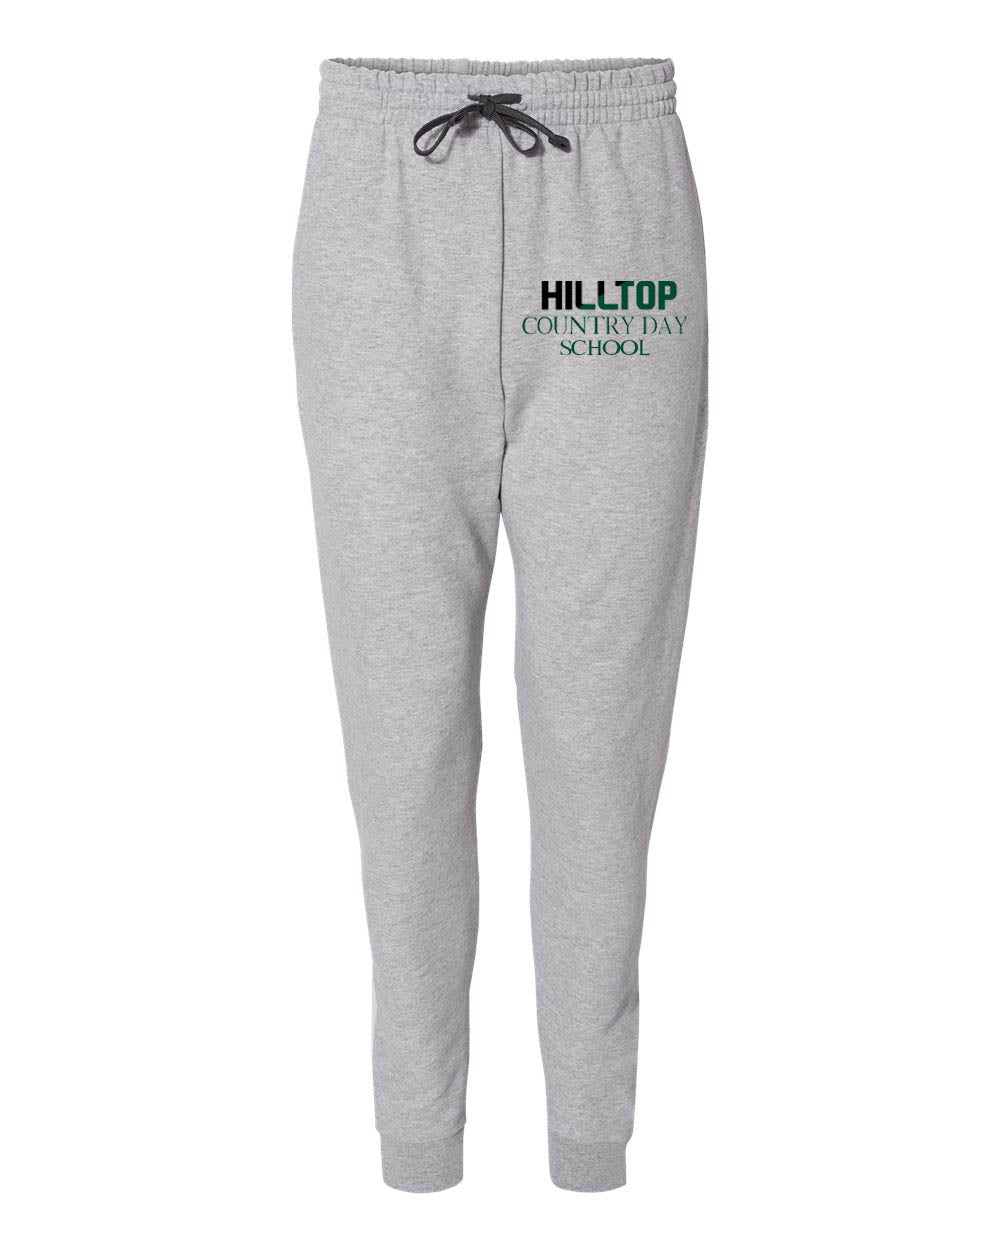 Hilltop Country Day School design 4 Sweatpants